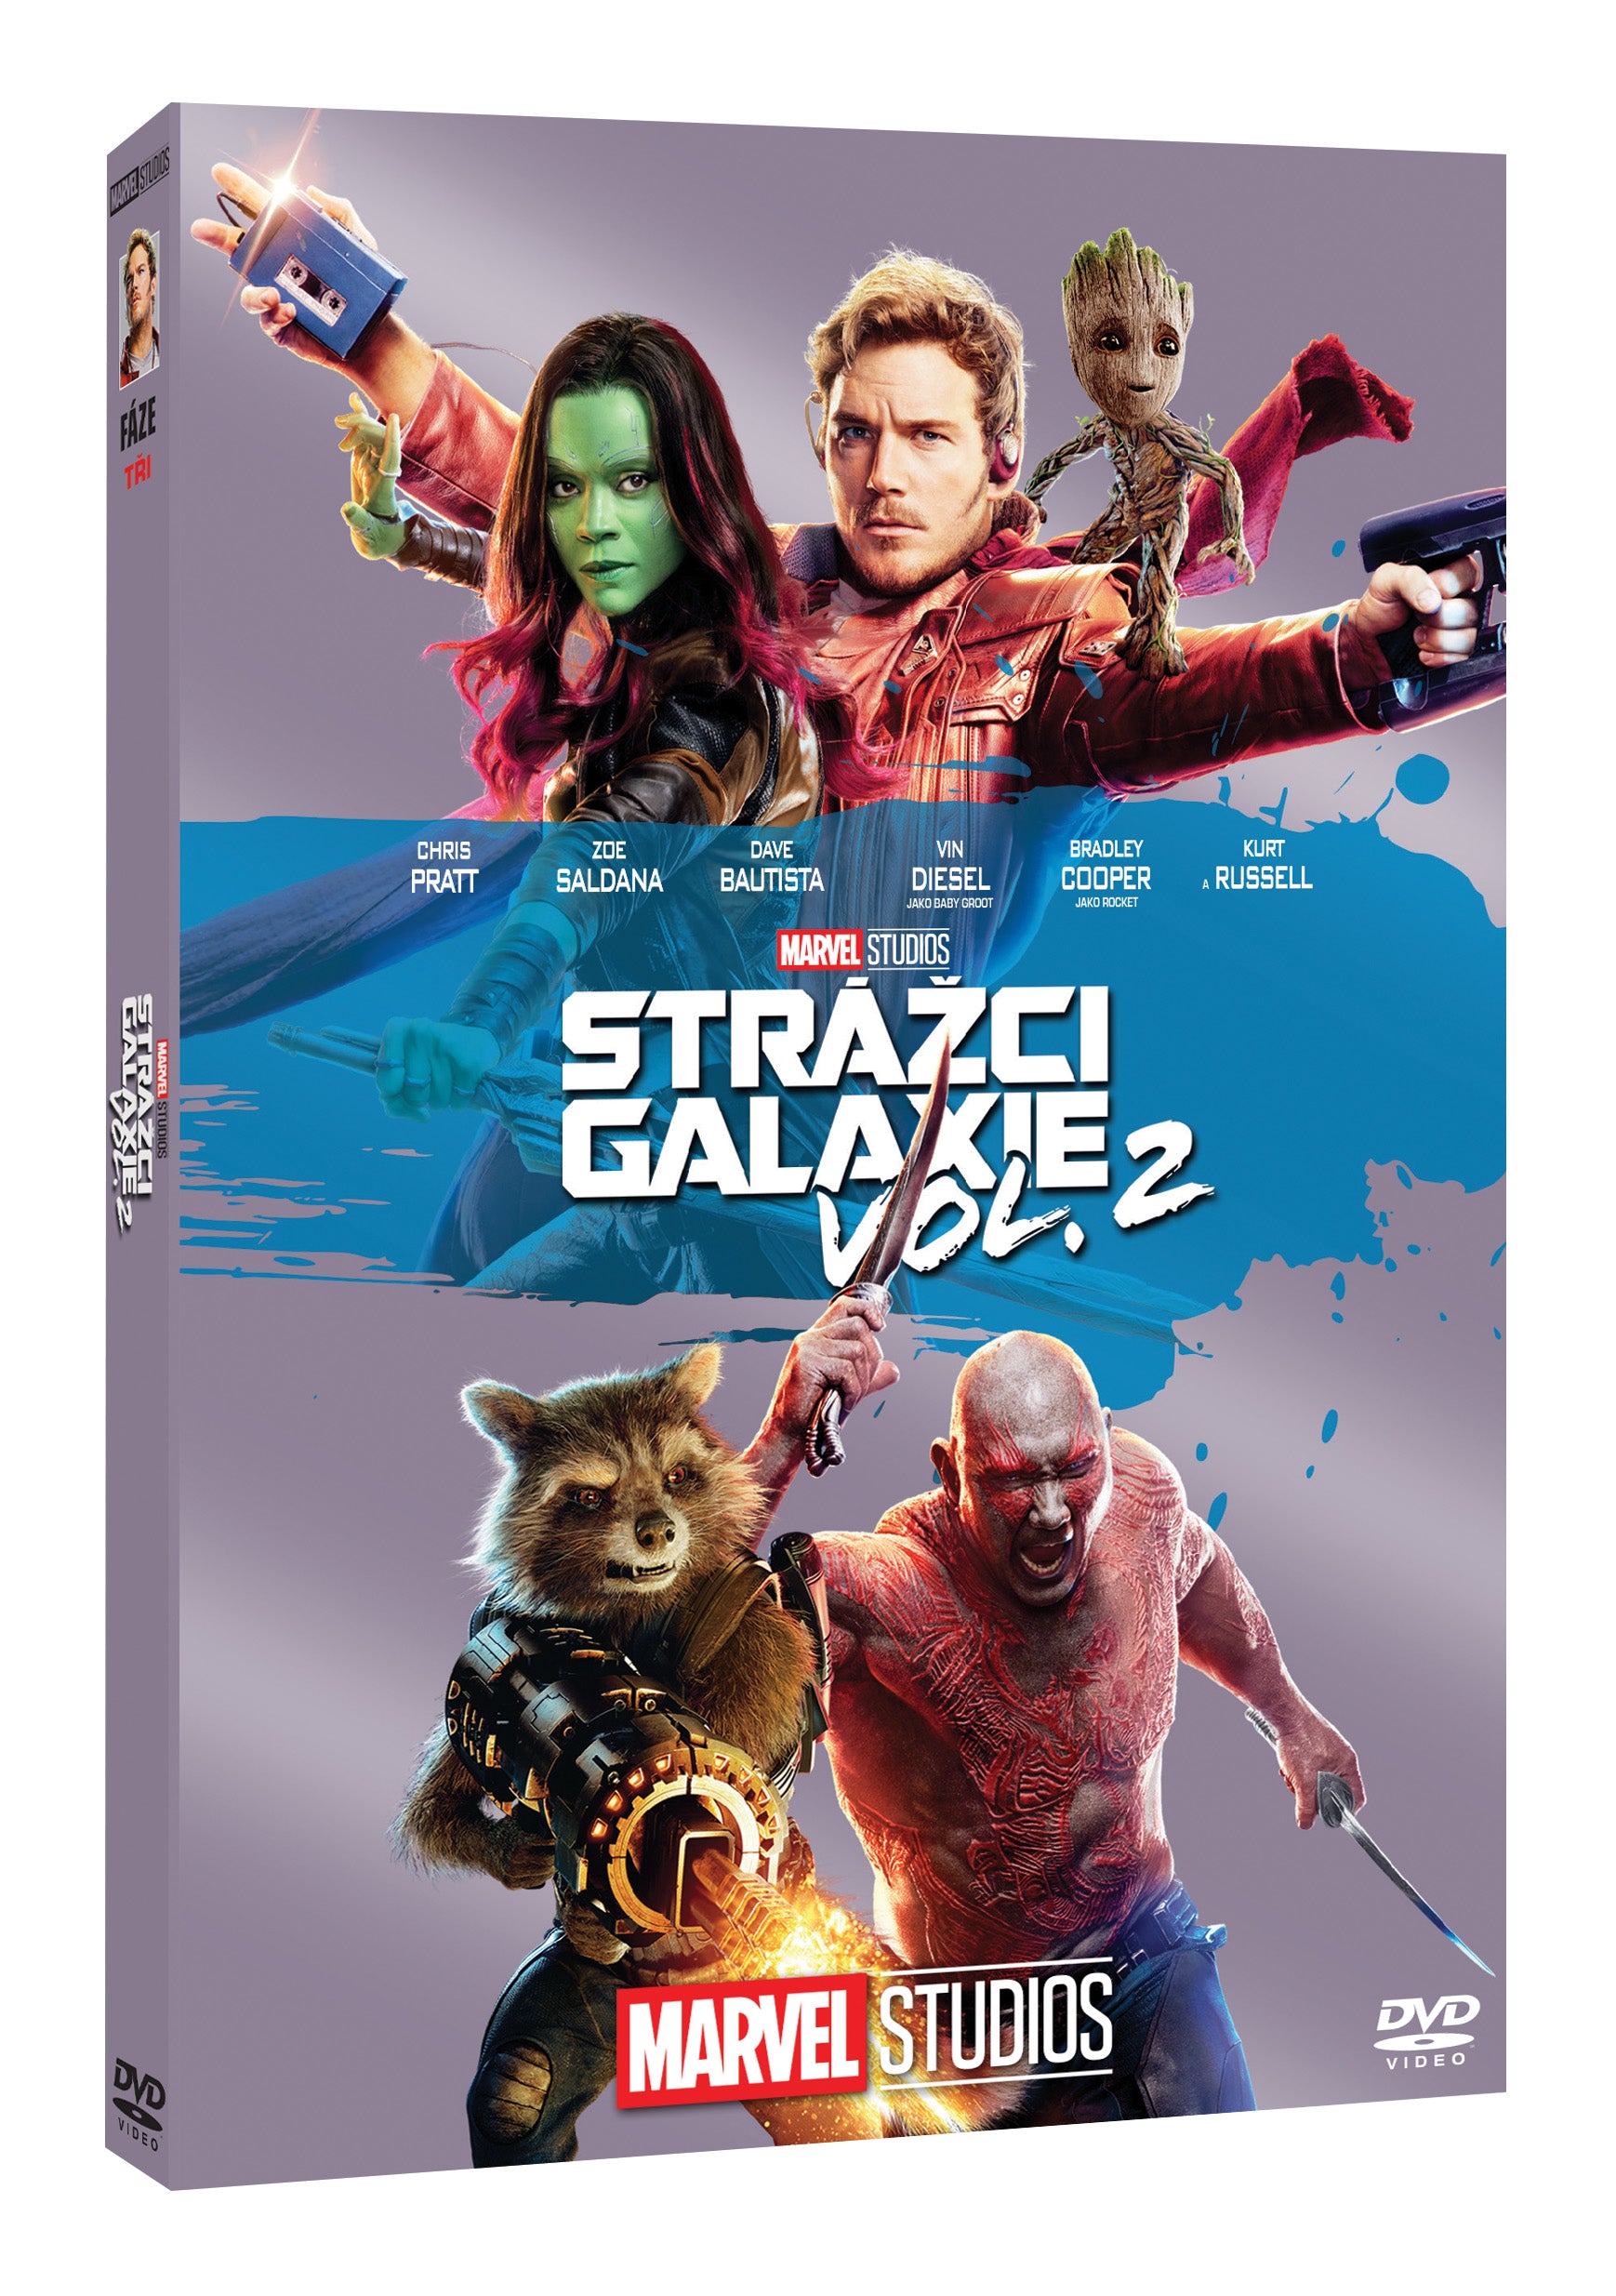 Strazci Galaxie Vol. 2 DVD - Edice Marvel 10 let / Guardians of the Galaxy Vol. 2